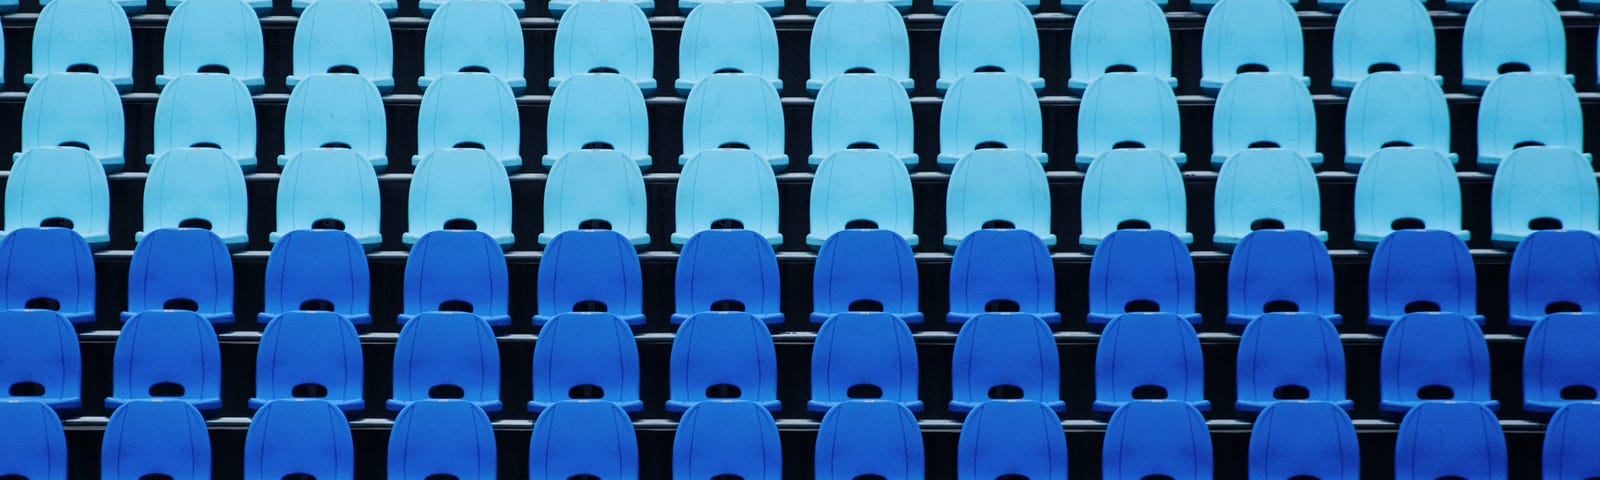 Image of multiple rows of empty blue stadium seats